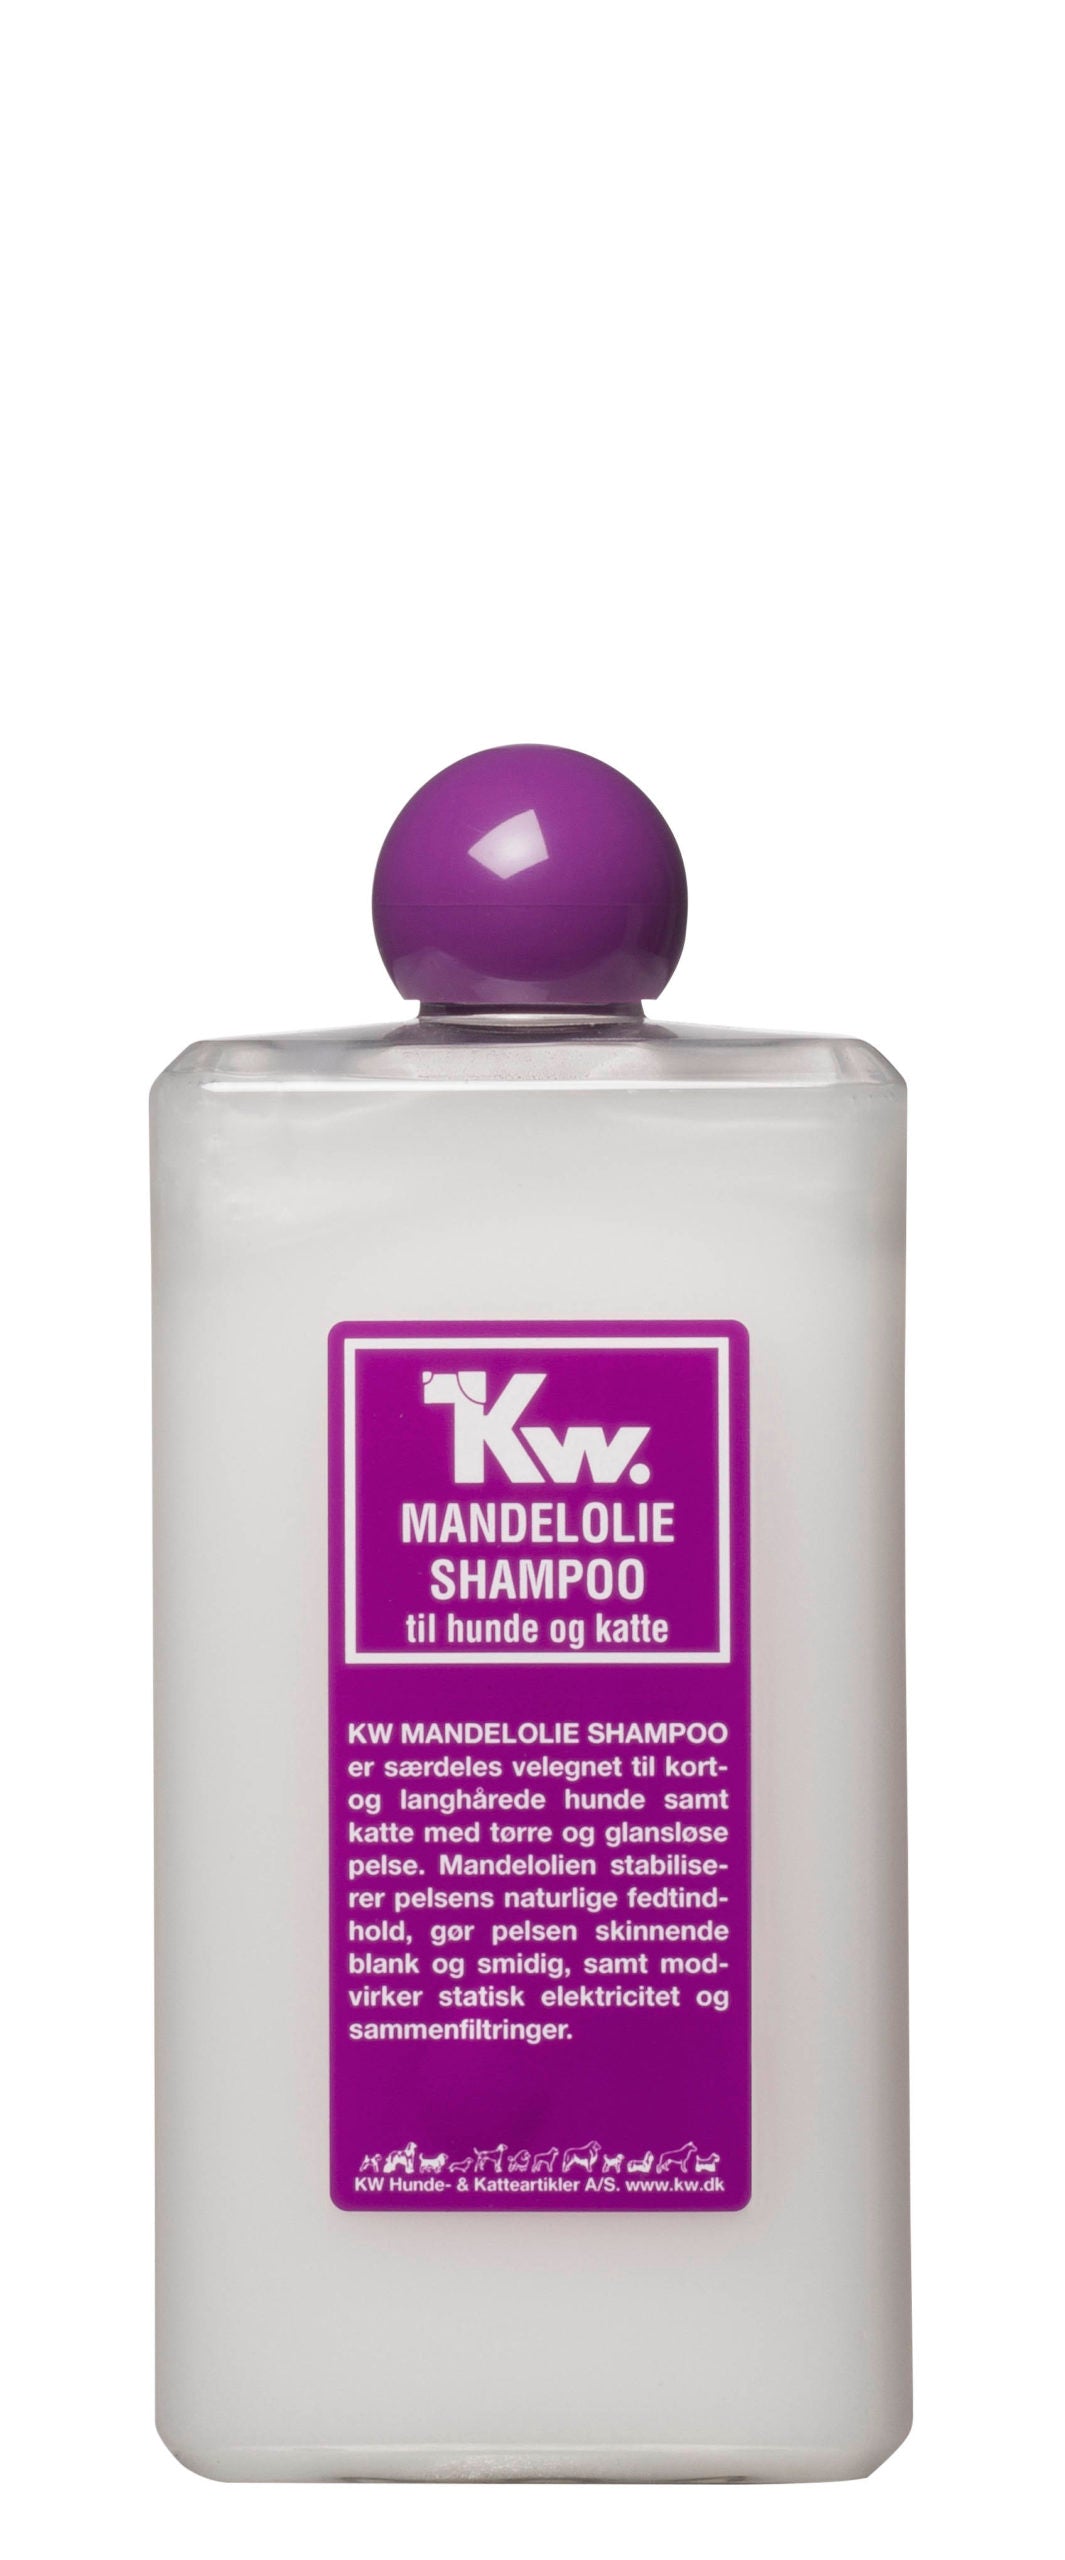 KW Mandelolie Shampoo